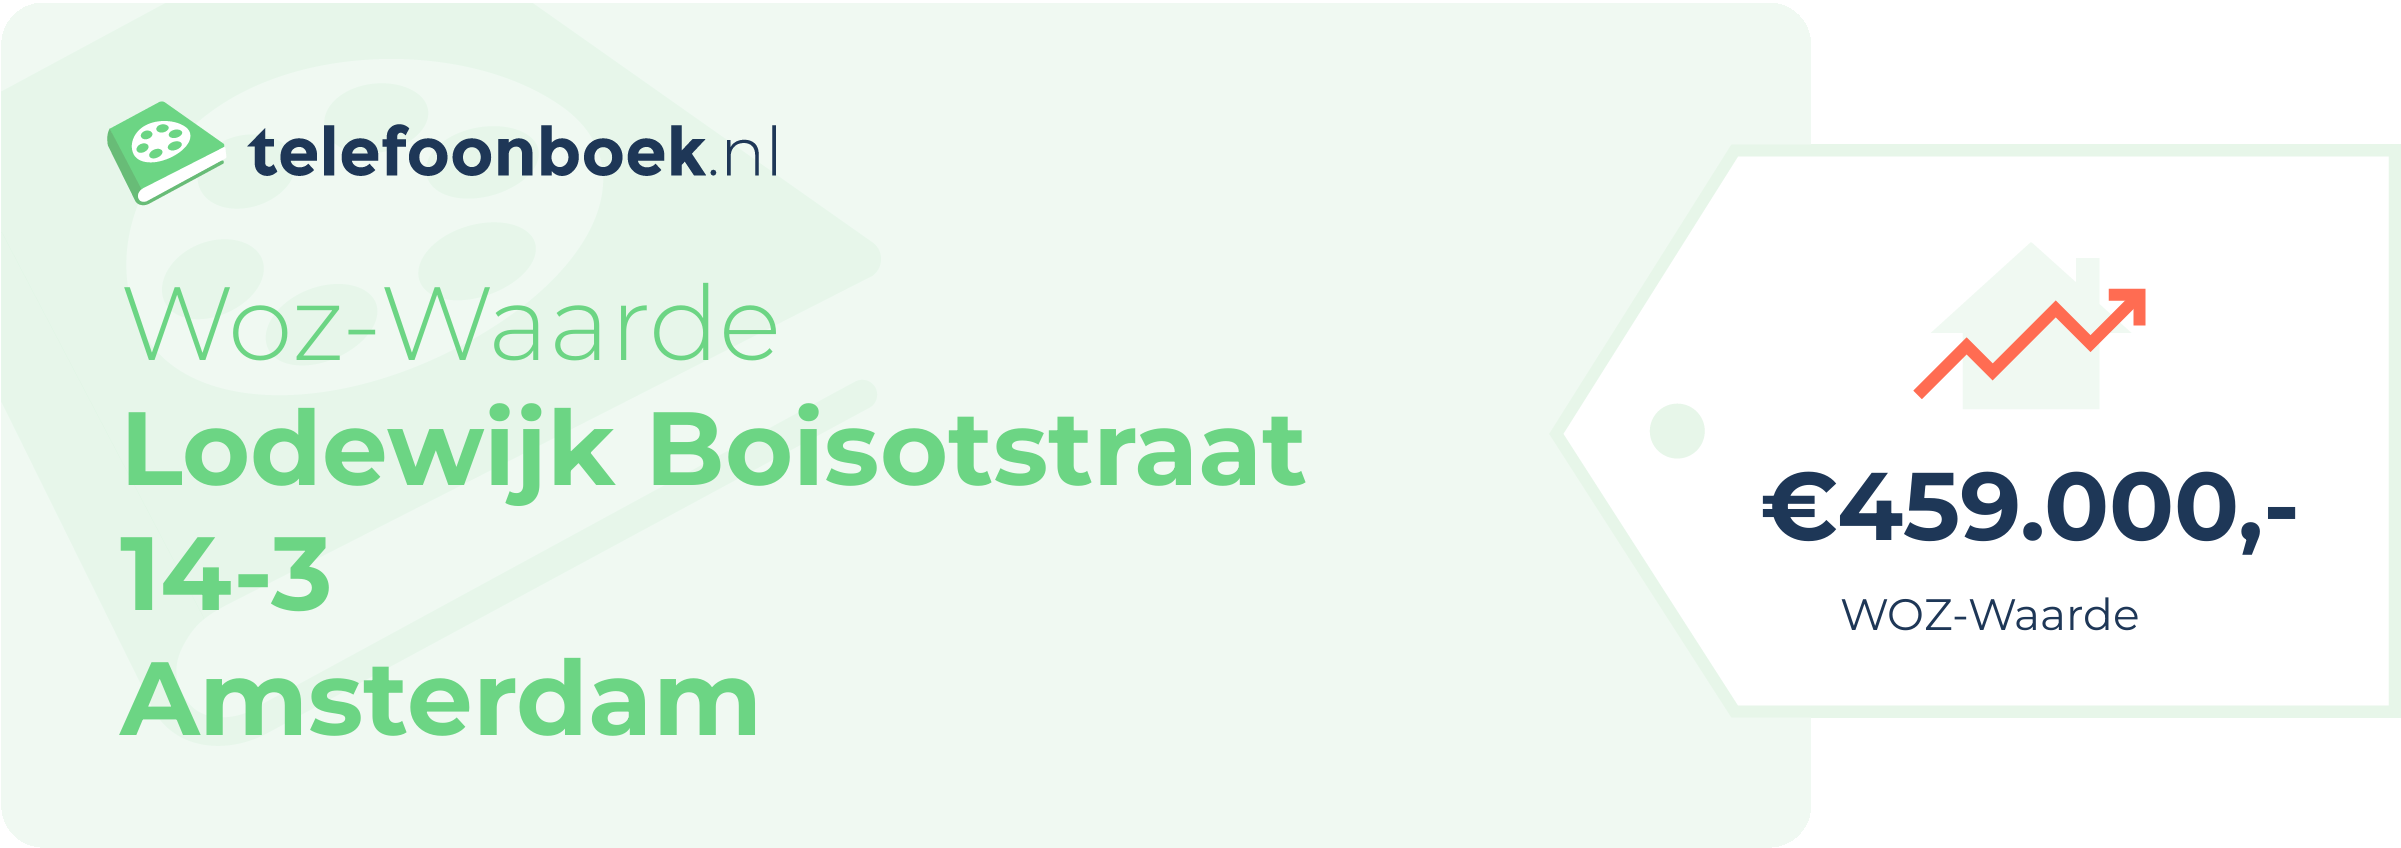 WOZ-waarde Lodewijk Boisotstraat 14-3 Amsterdam